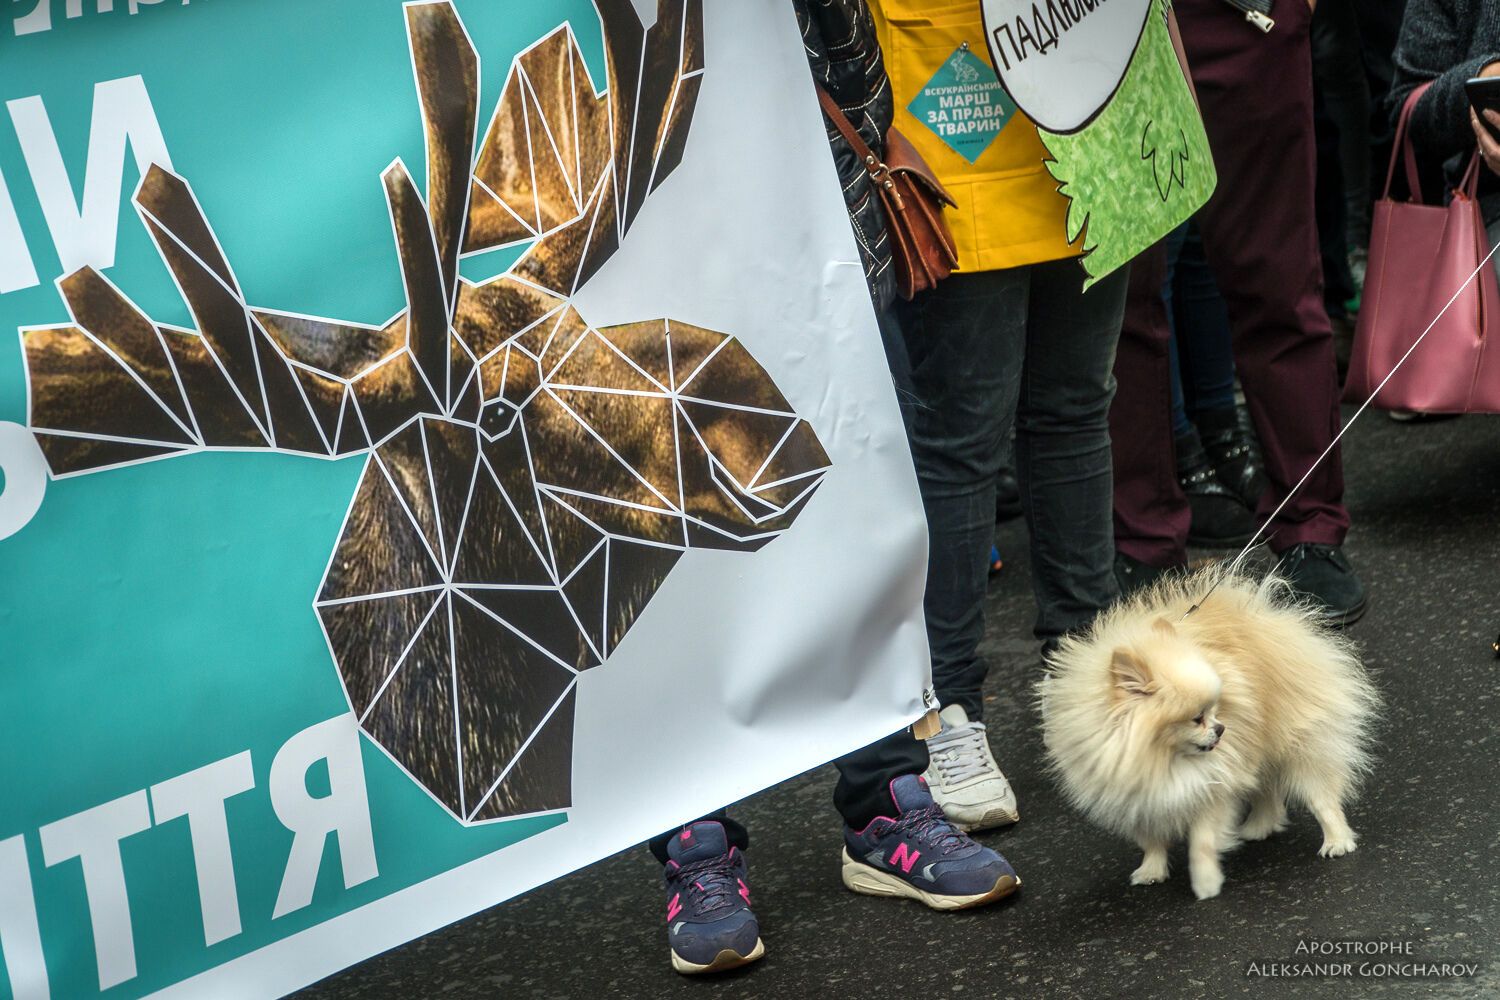 "Мене вбили твої розваги": у Києві пройшов гучний Марш за права тварин